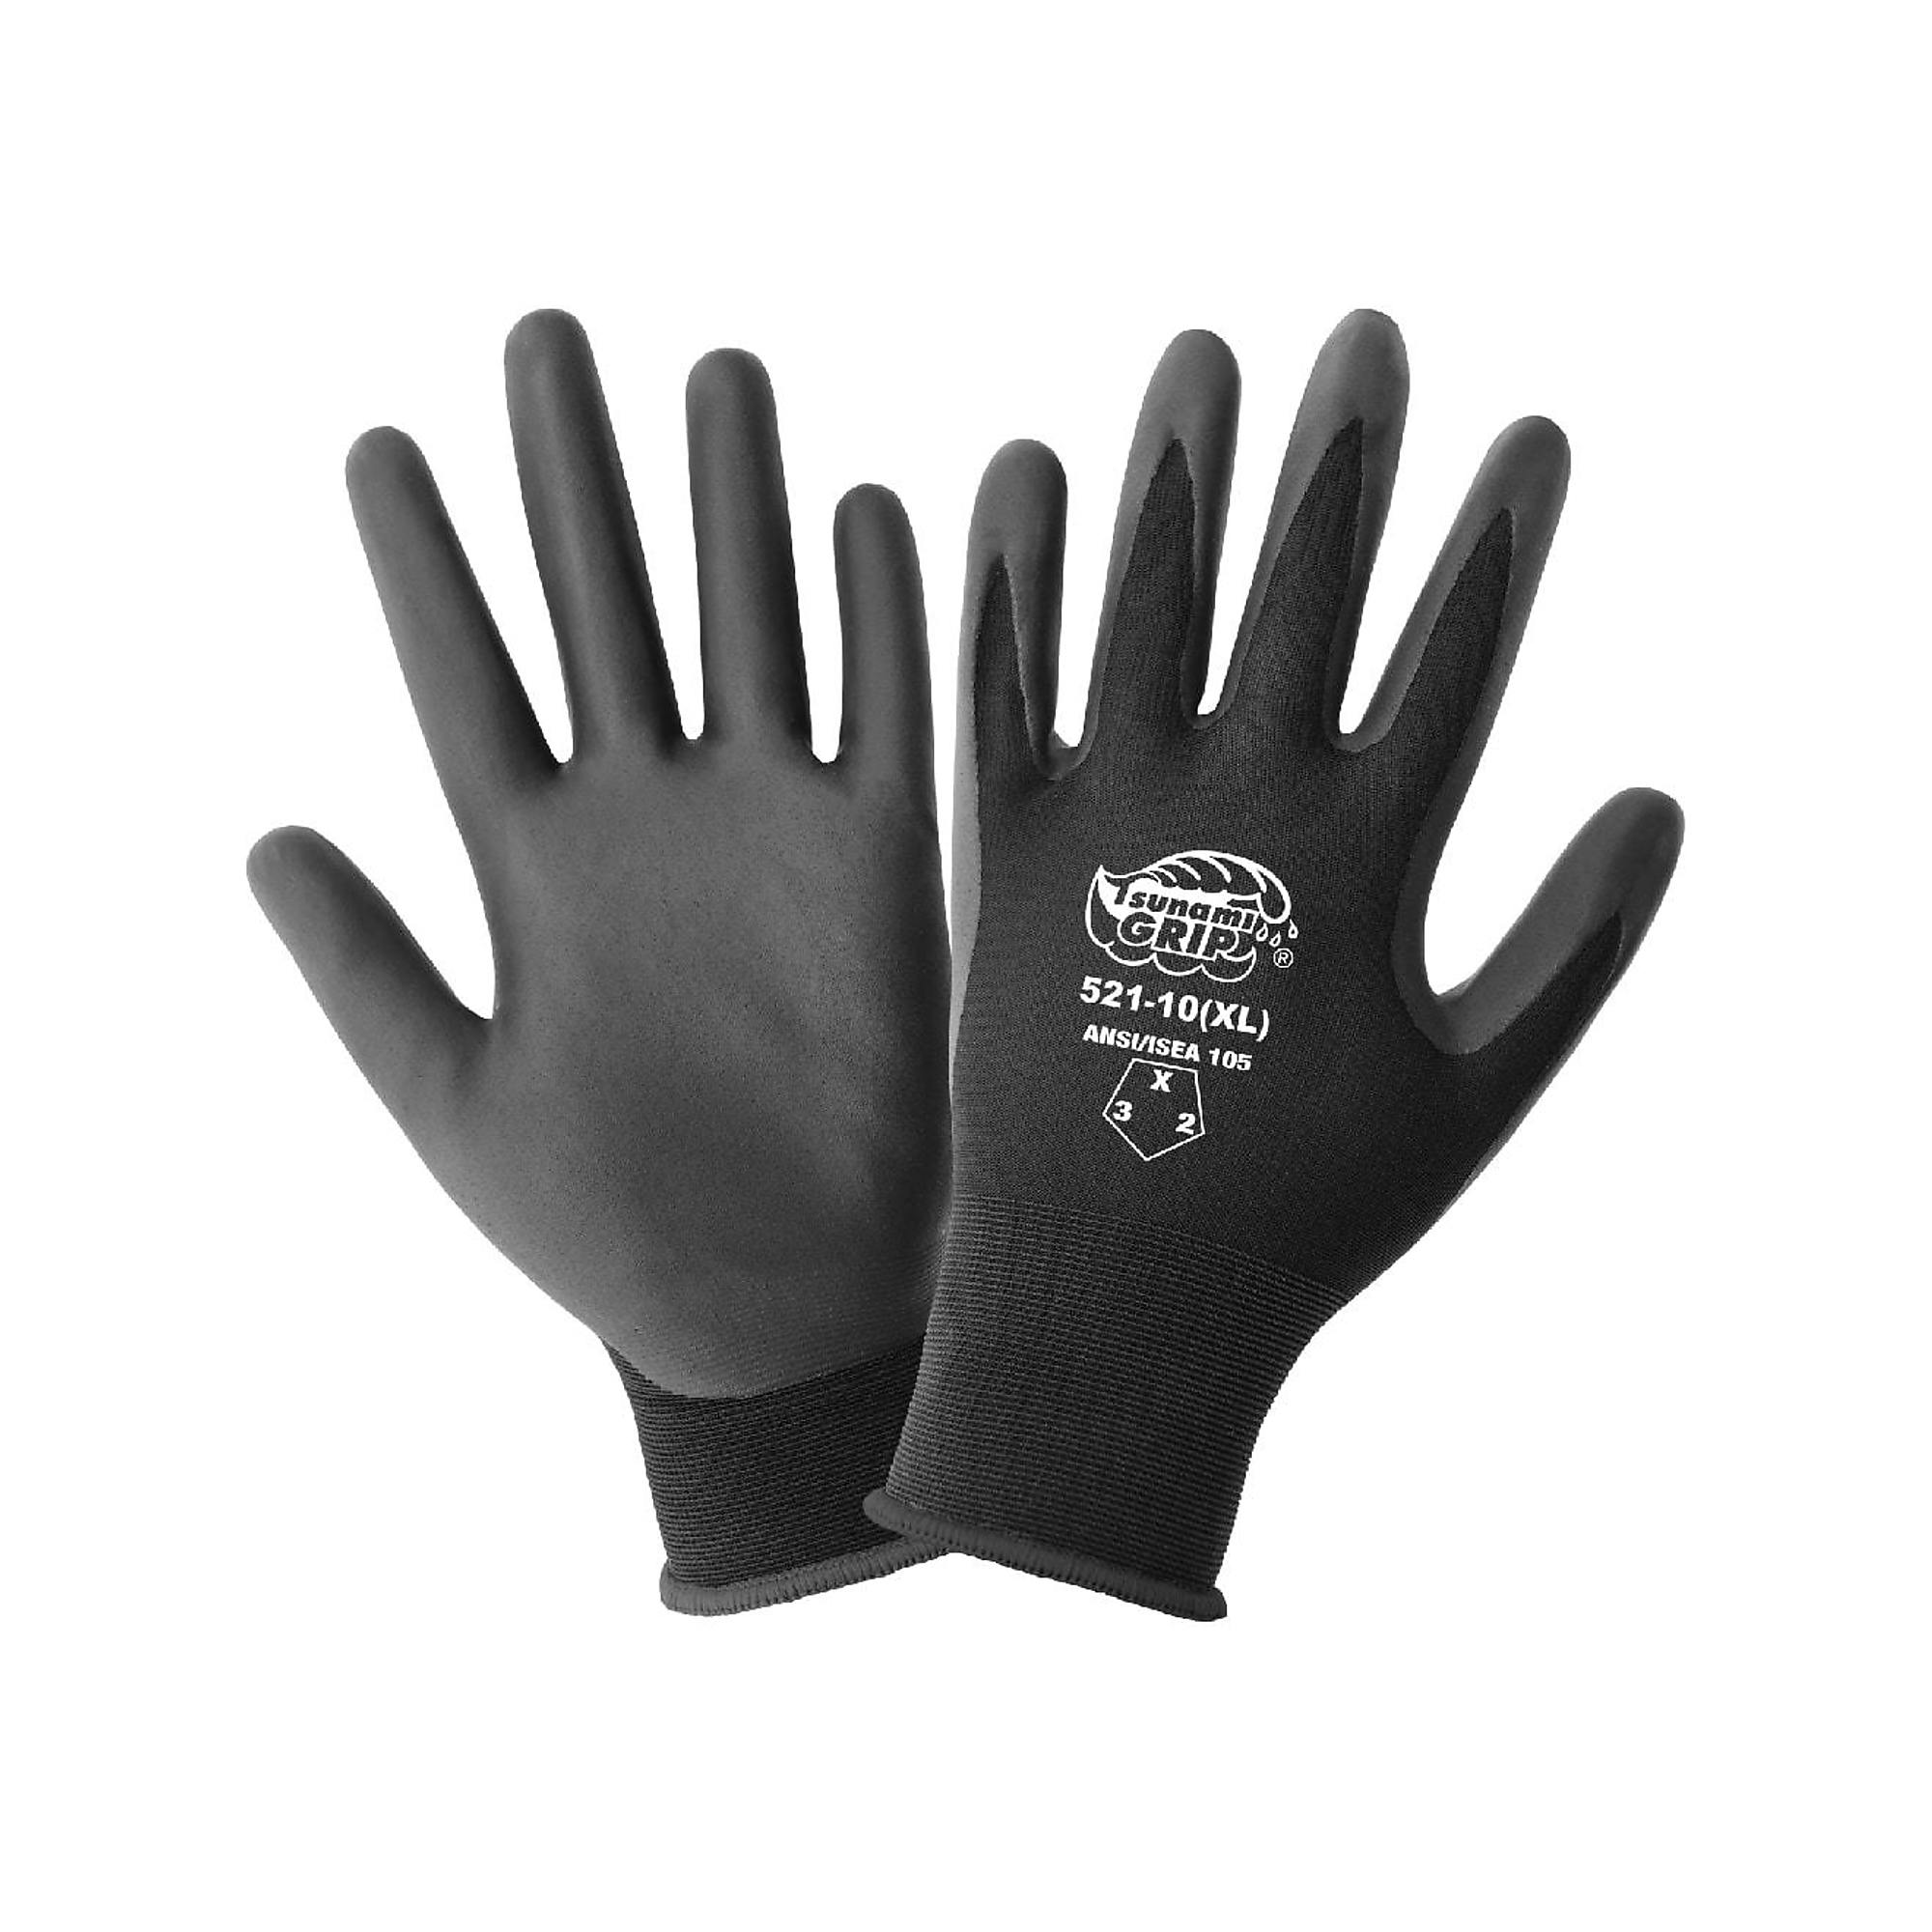 Global Glove Tsunami Grip , Tsunami Grip FDA Nitrile Coated 21-Gauge Gloves - 12 Pairs, Size XL, Color Black, Included (qty.) 12 Model 521-10(XL)